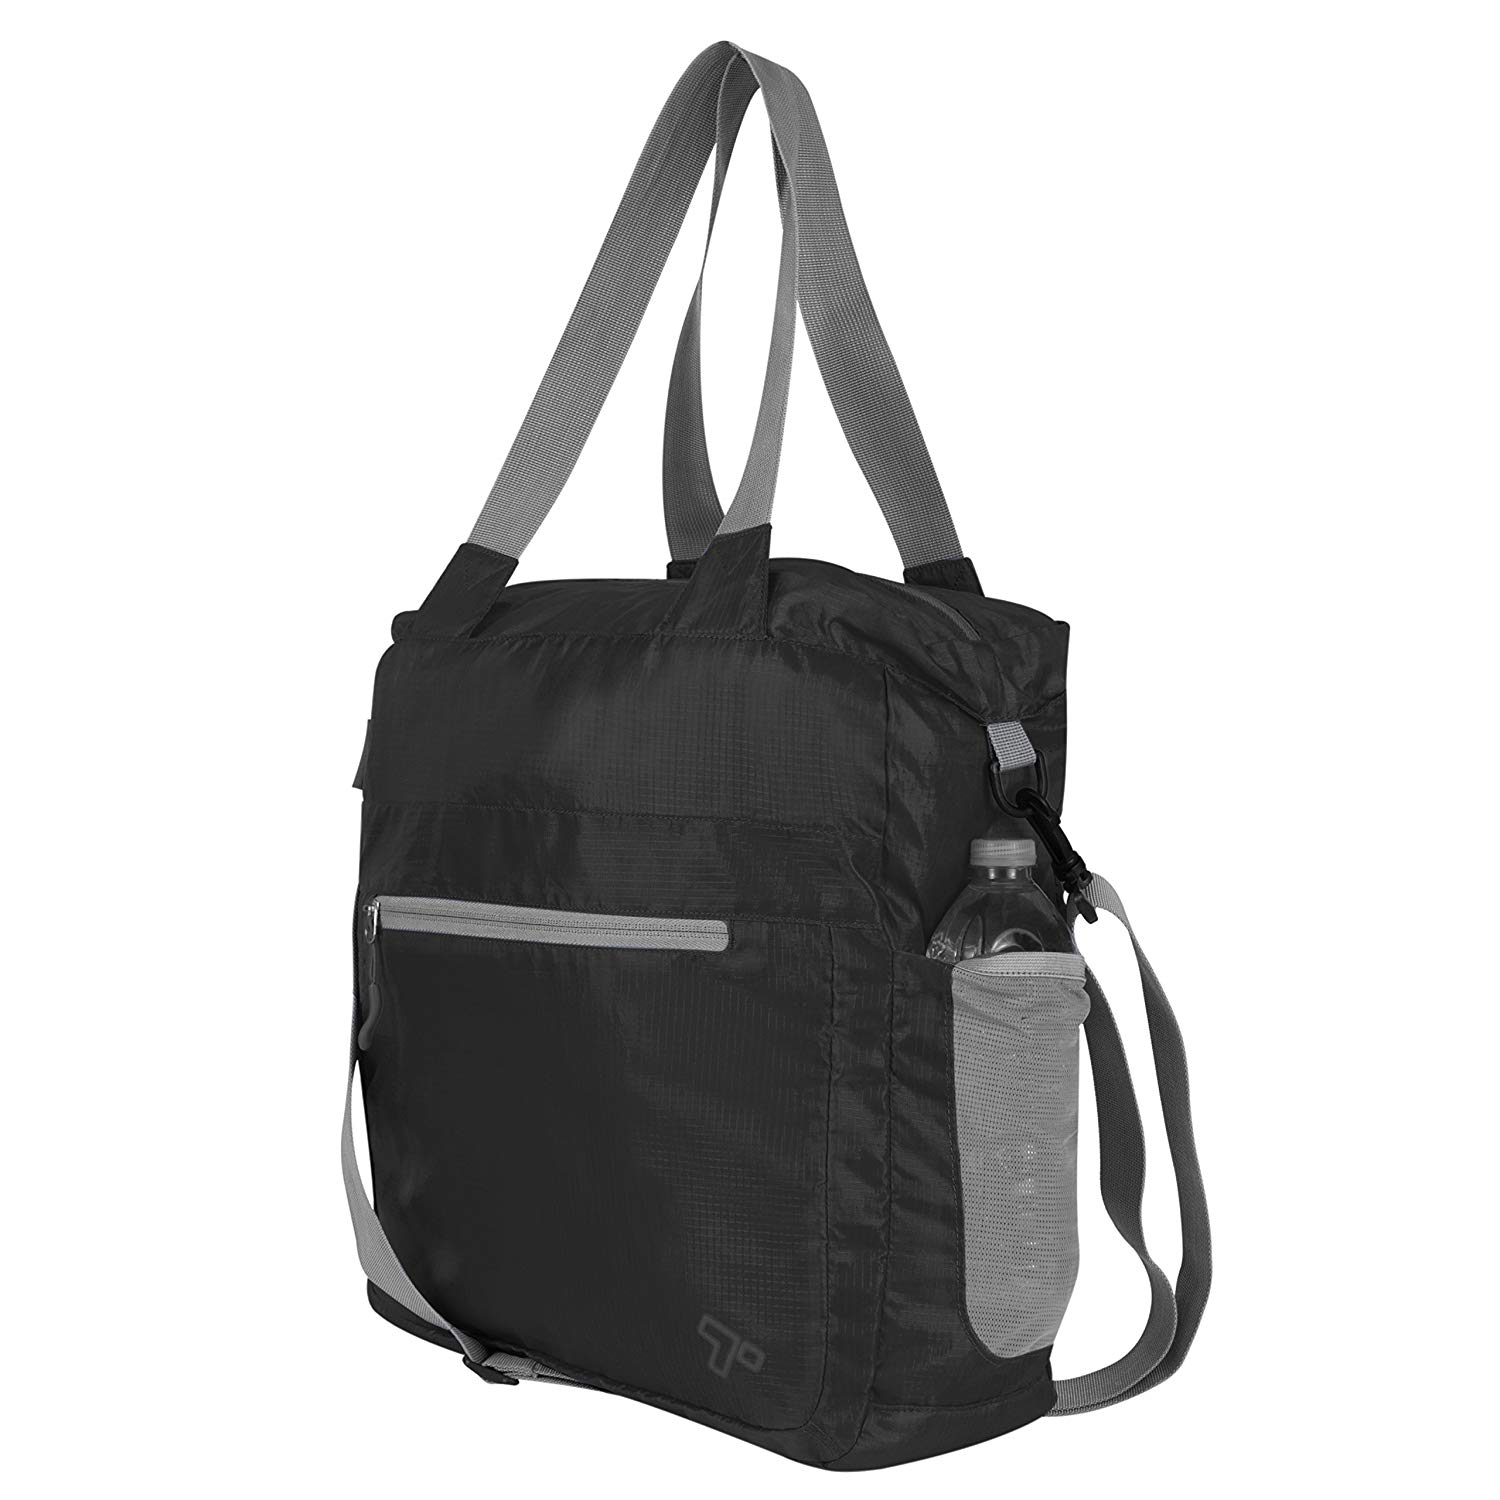 VÄRLDENS Travel tote bag, black, 28x12x44 cm/16 l (11x4 ¾x17 ¼/4